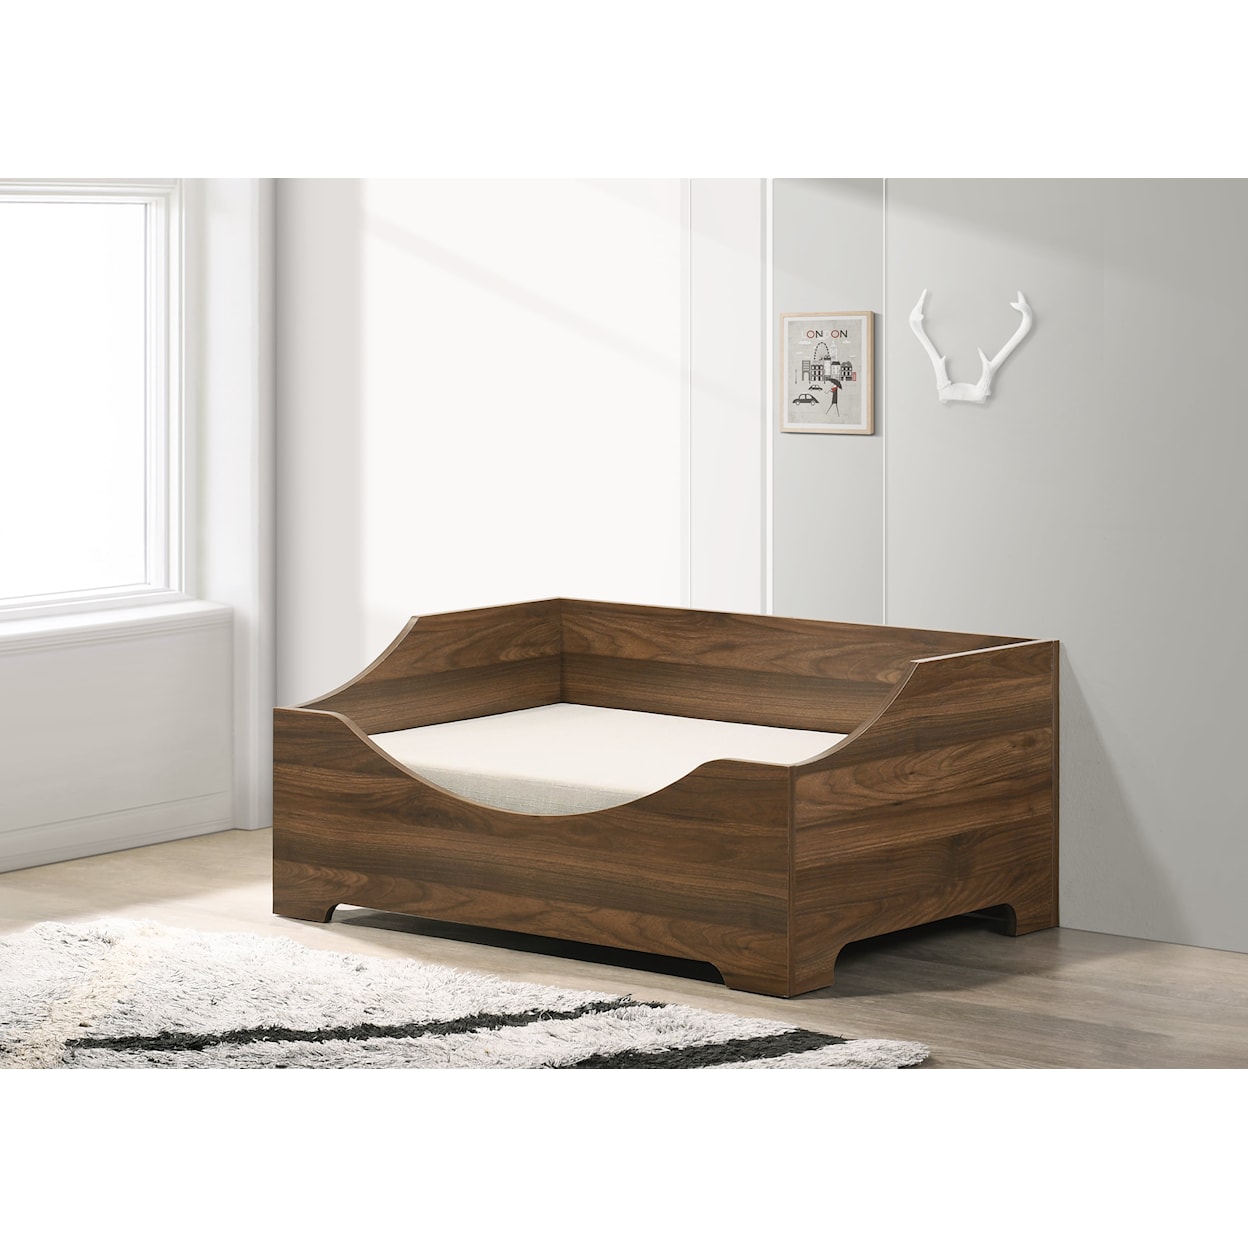 Progressive Furniture Rootbeer Pet Bed W/Cushion